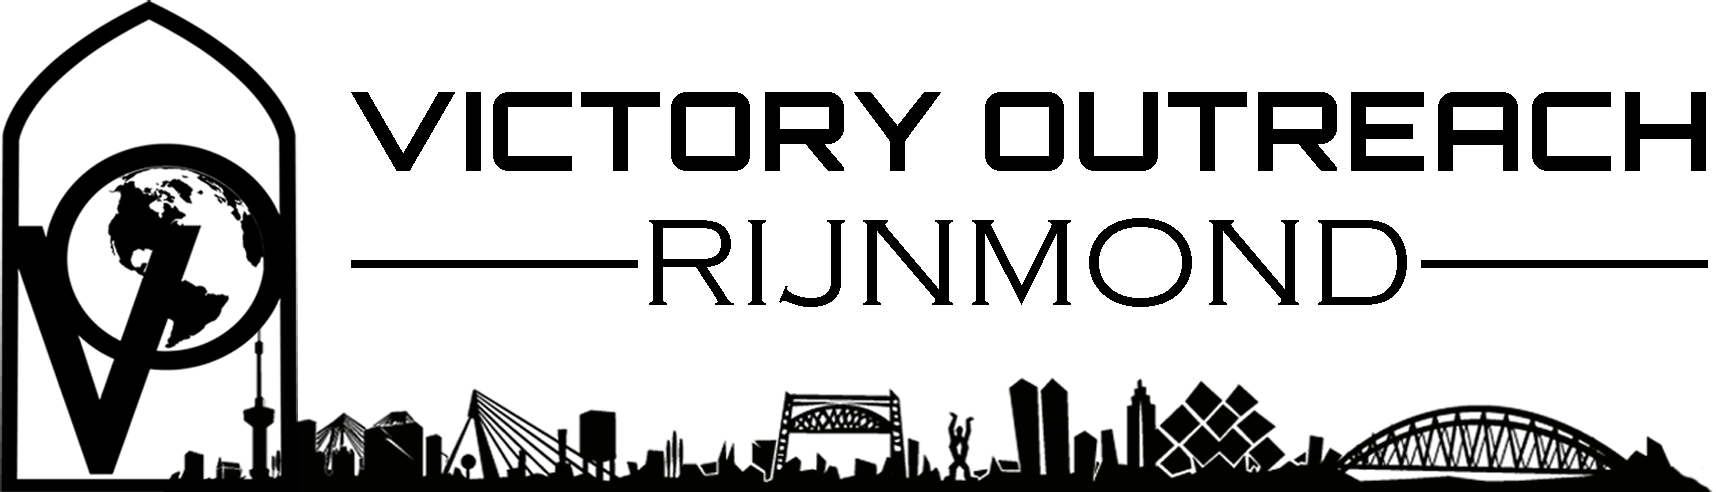 Victory Outreach Rijnmond